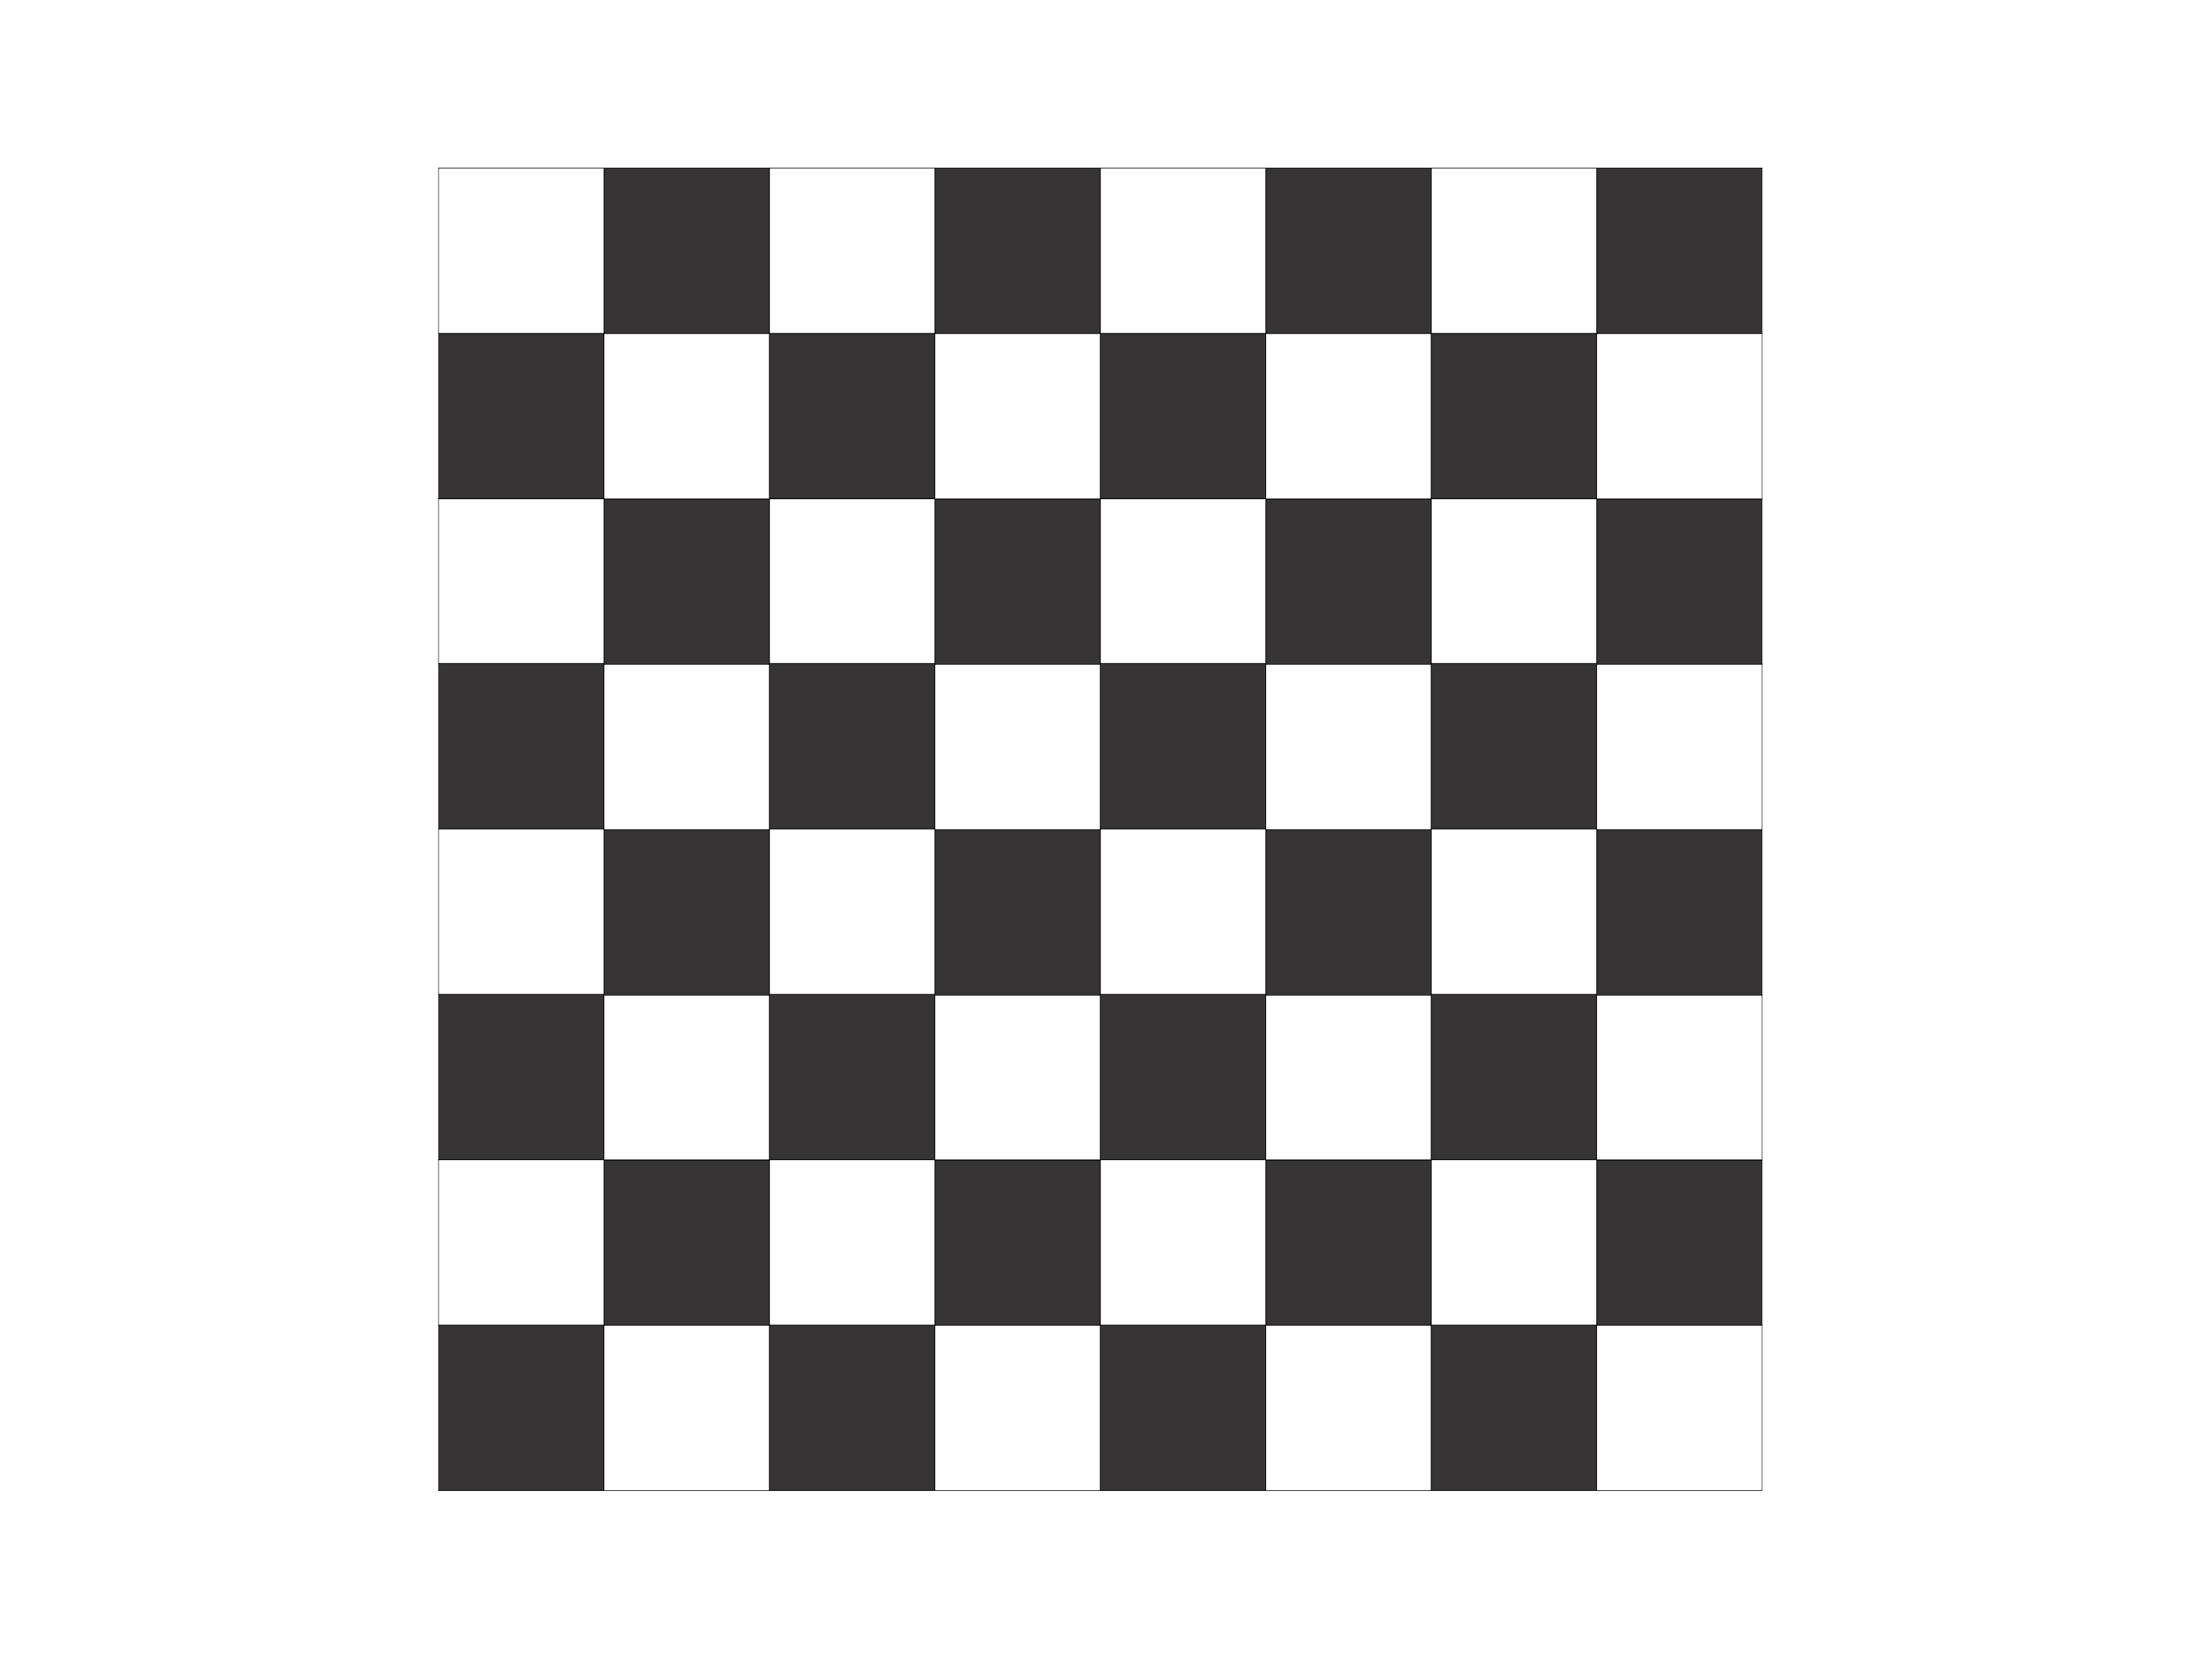 Шахматная доска 5 на 5. Шахматная доска. Шахматная доска для печати. Шахматное поле для печати. Поле шахматной доски.